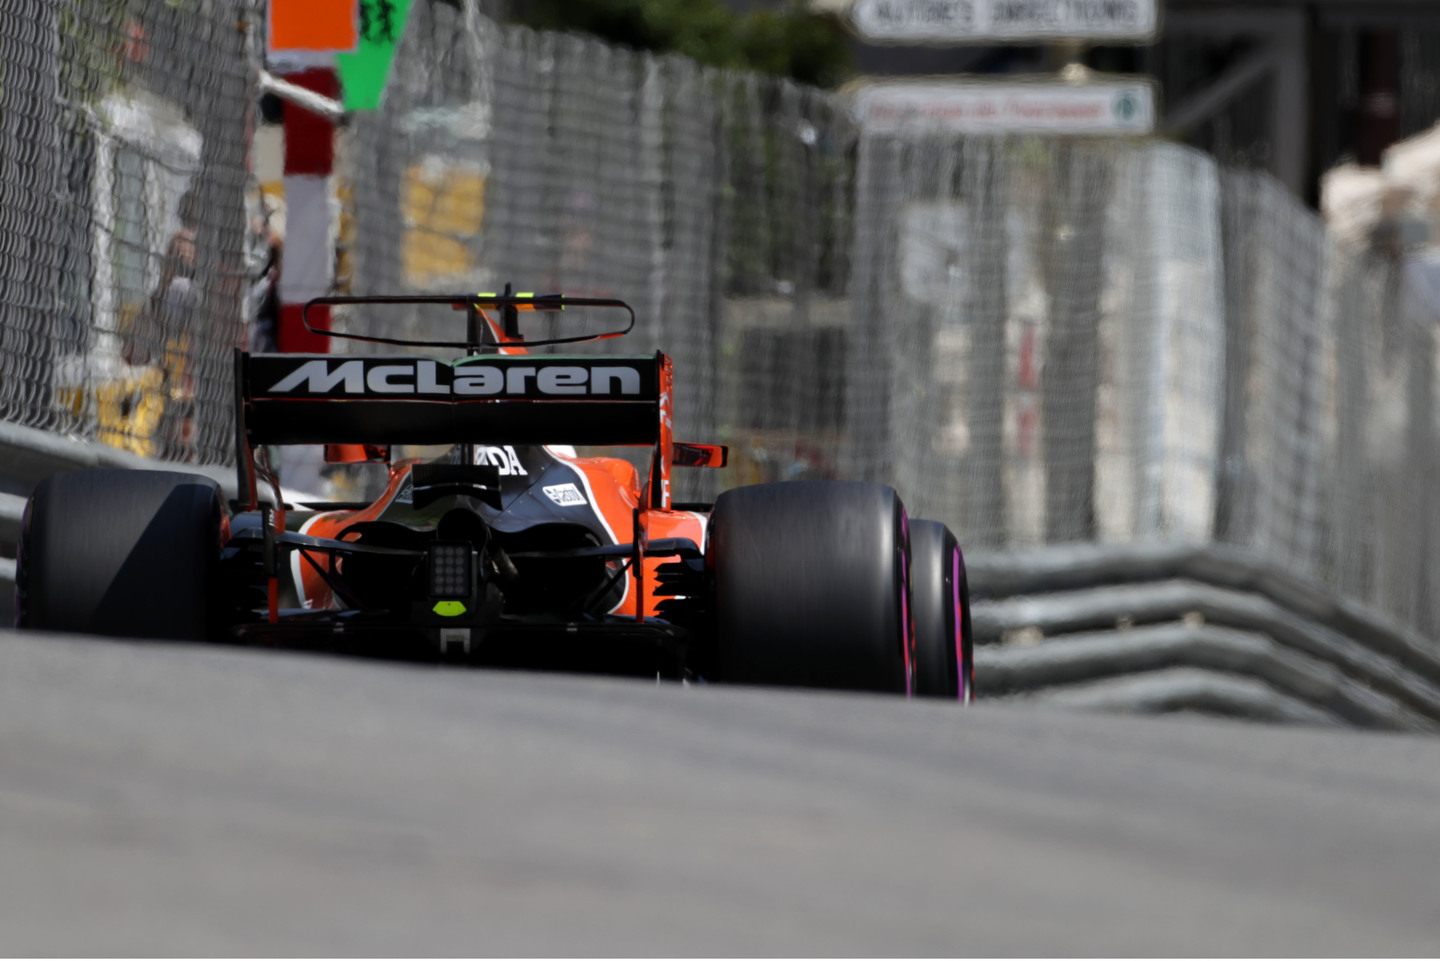 McLaren T-wing © formula1.files.wordpress.com